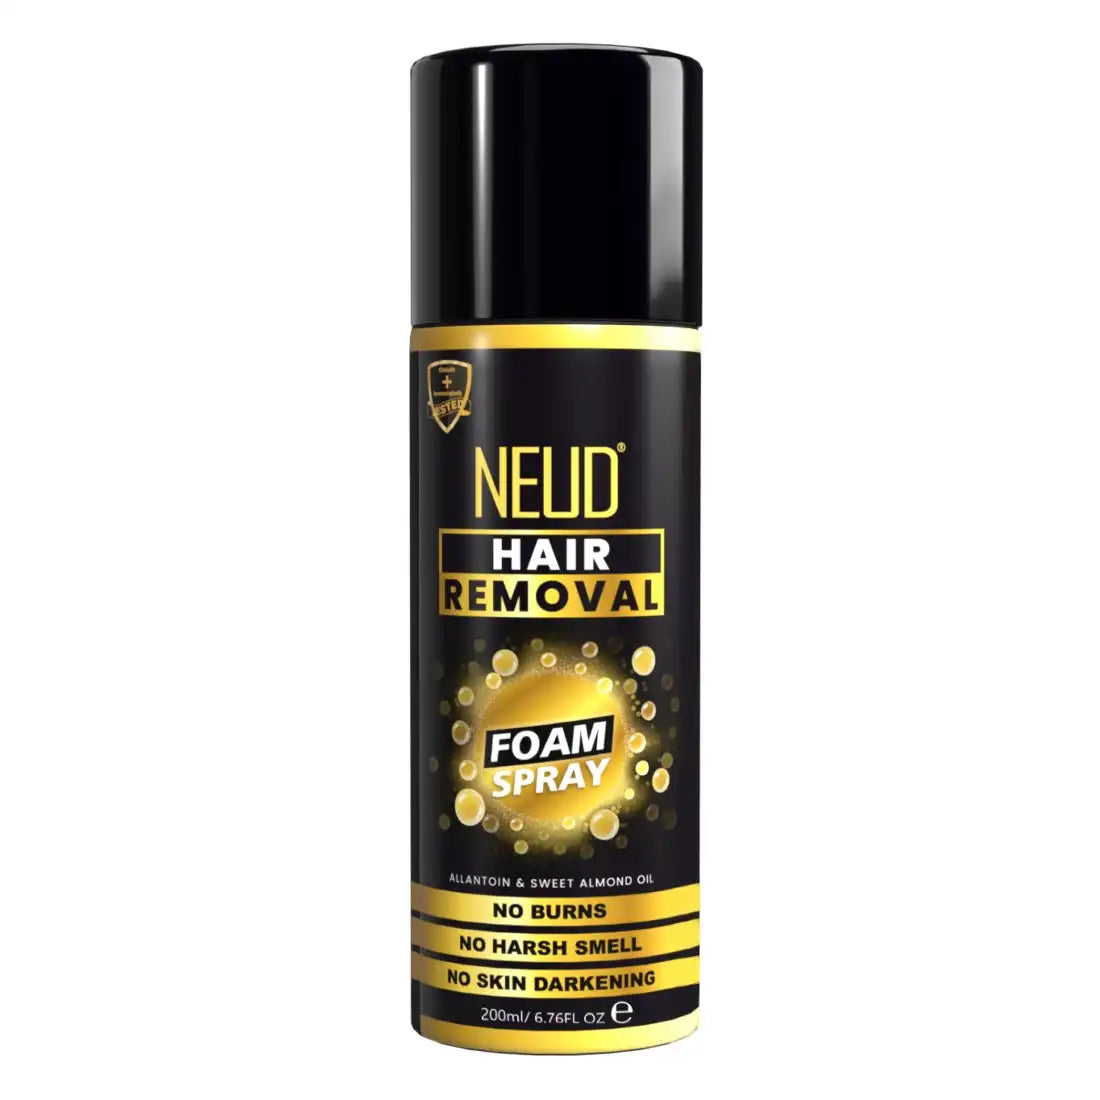 NEUD Hair Removal Foam Spray with No Burns, Harsh Smell or Skin Darkening - 200ml